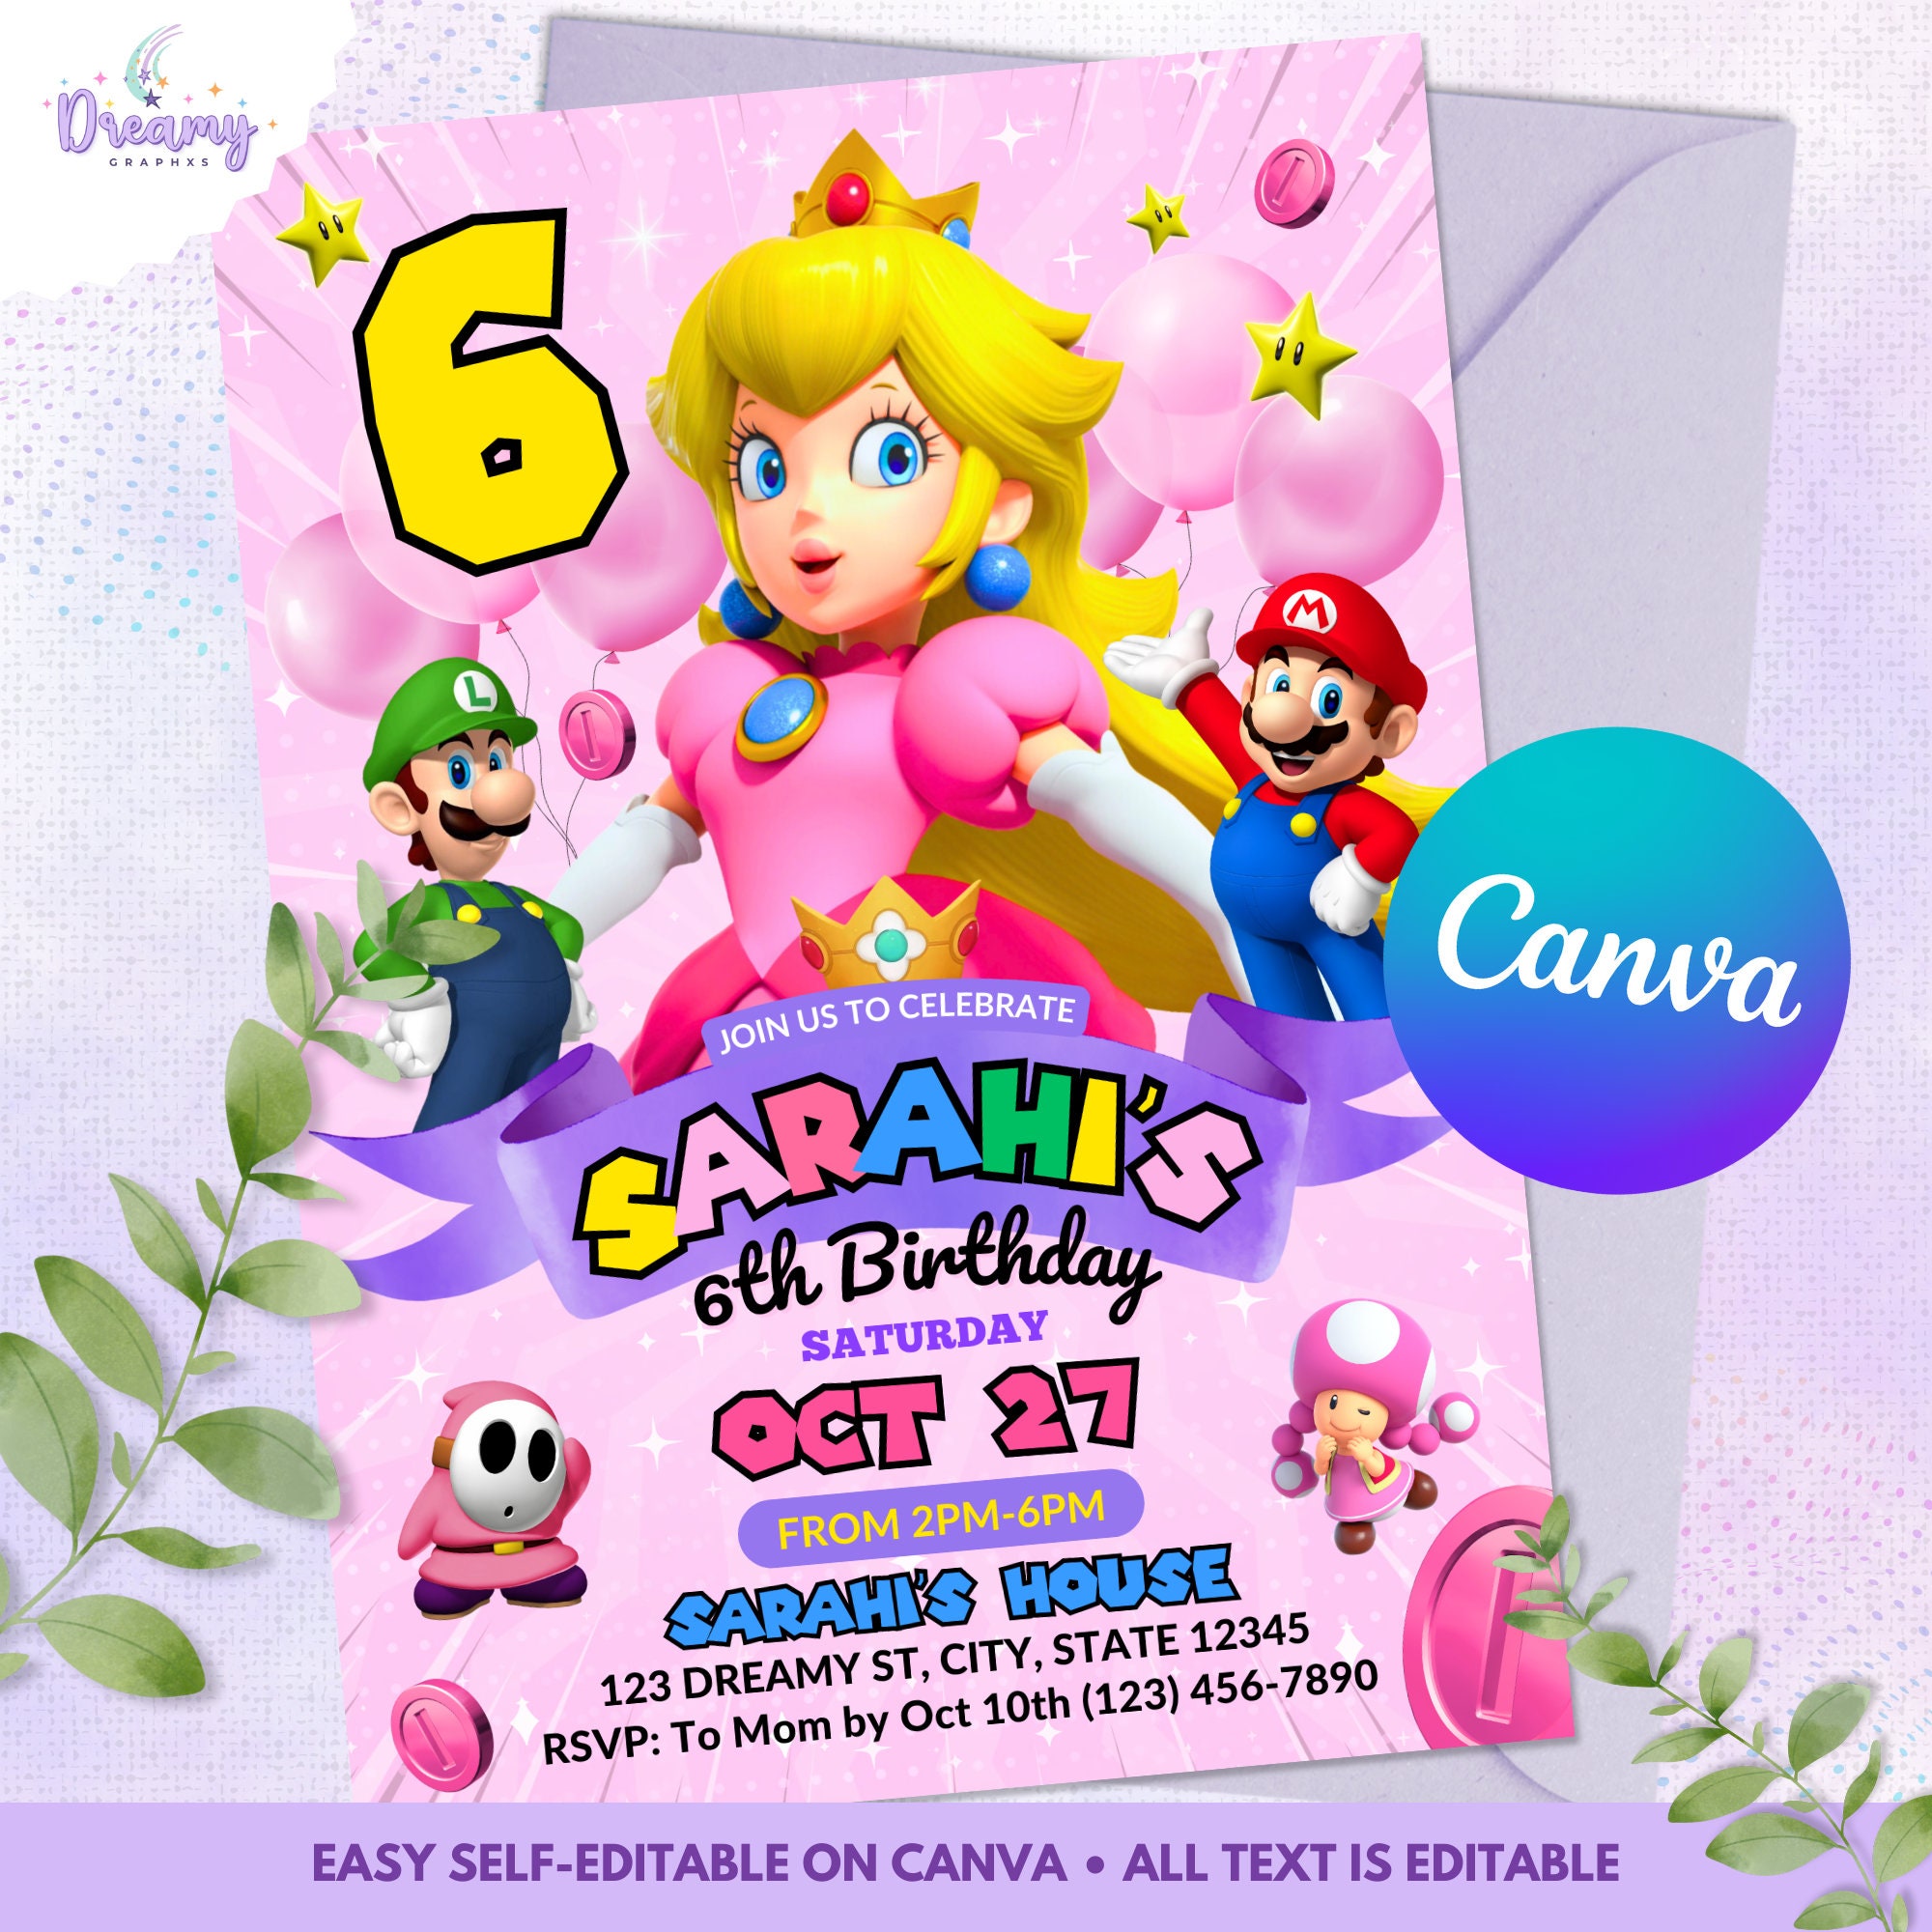 Mario Princess Alphabet Princess Peach Font Mario Princess PNG Clipart Mario  Princess Peach Numbers Letters Invitations Birthday Shirt 